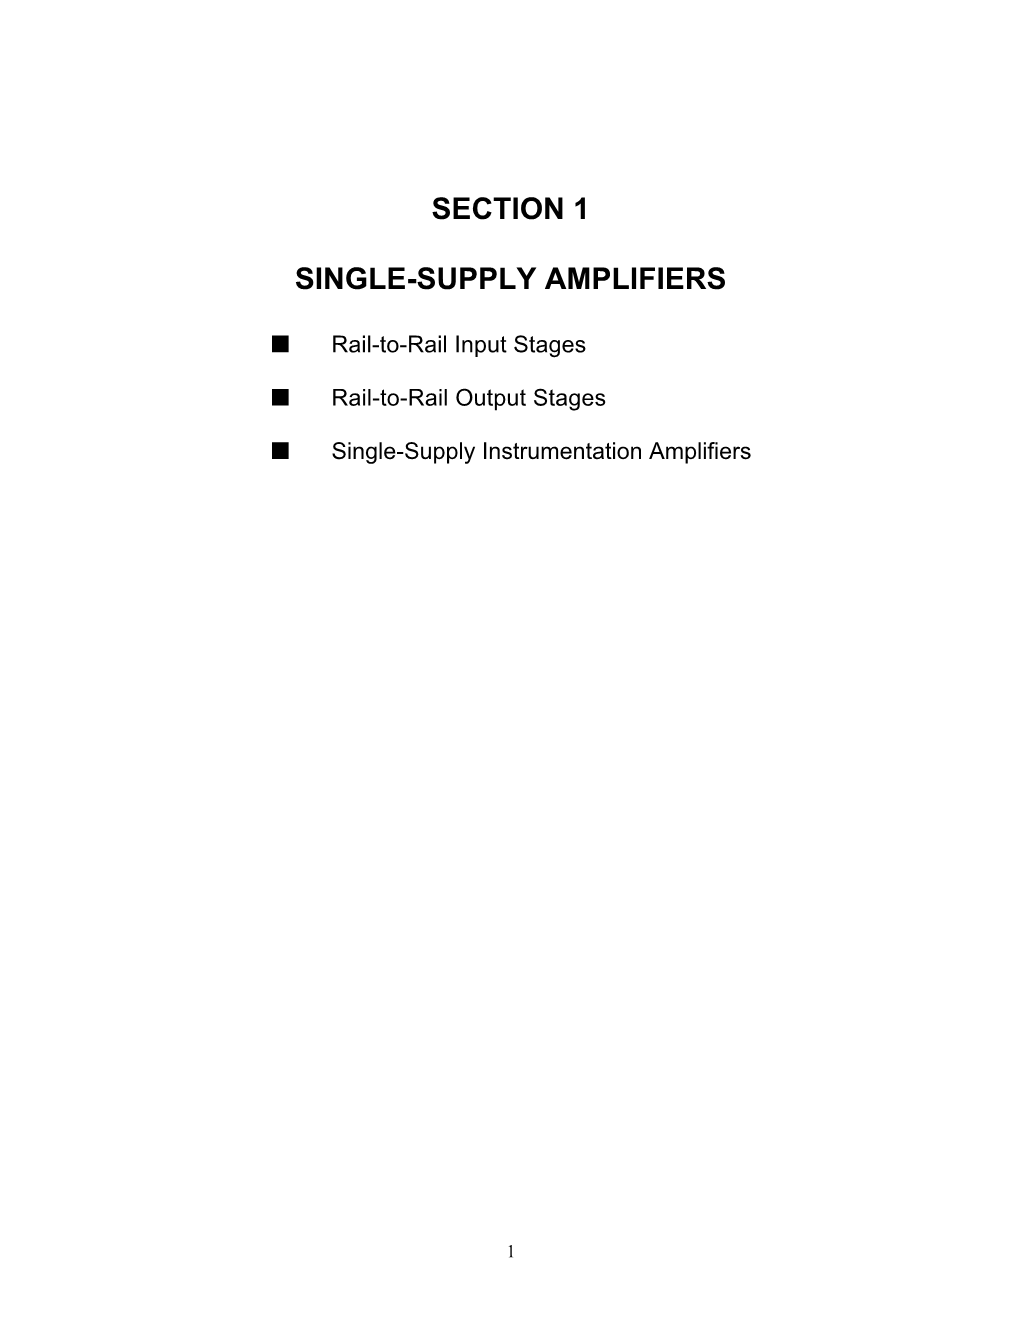 SECTION 1 SINGLE-SUPPLY AMPLIFIERS Adolfo Garcia